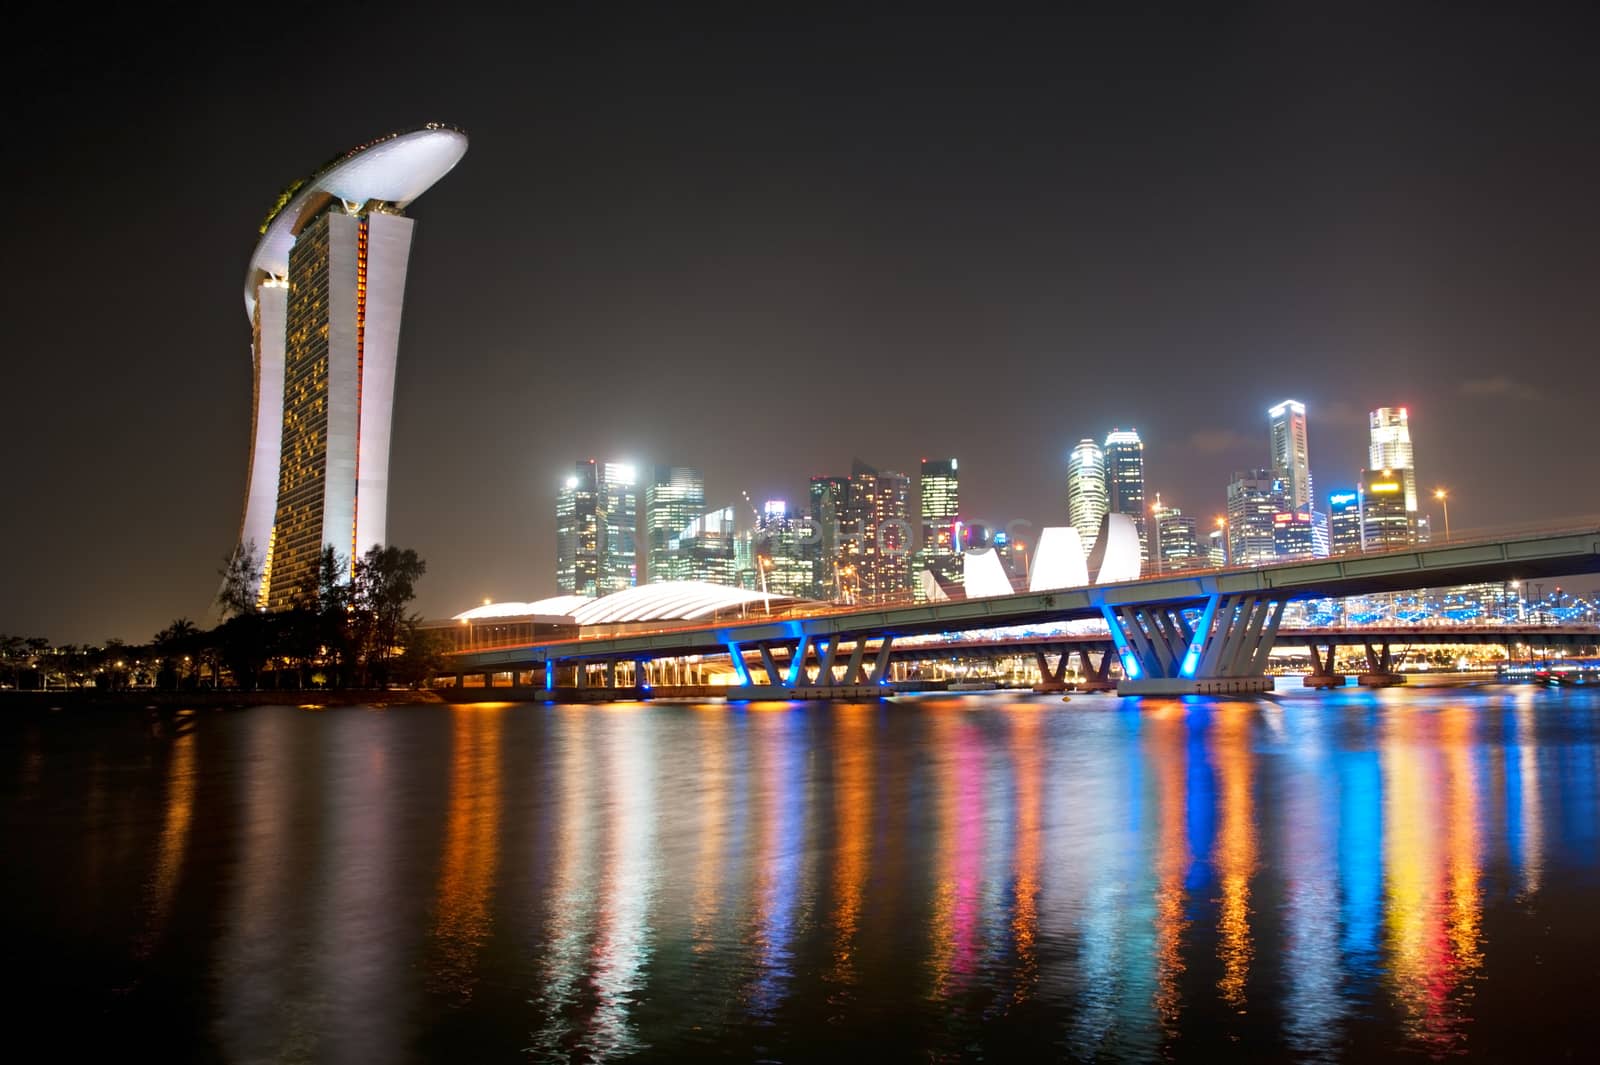 Singapore night cityscape by joyfull